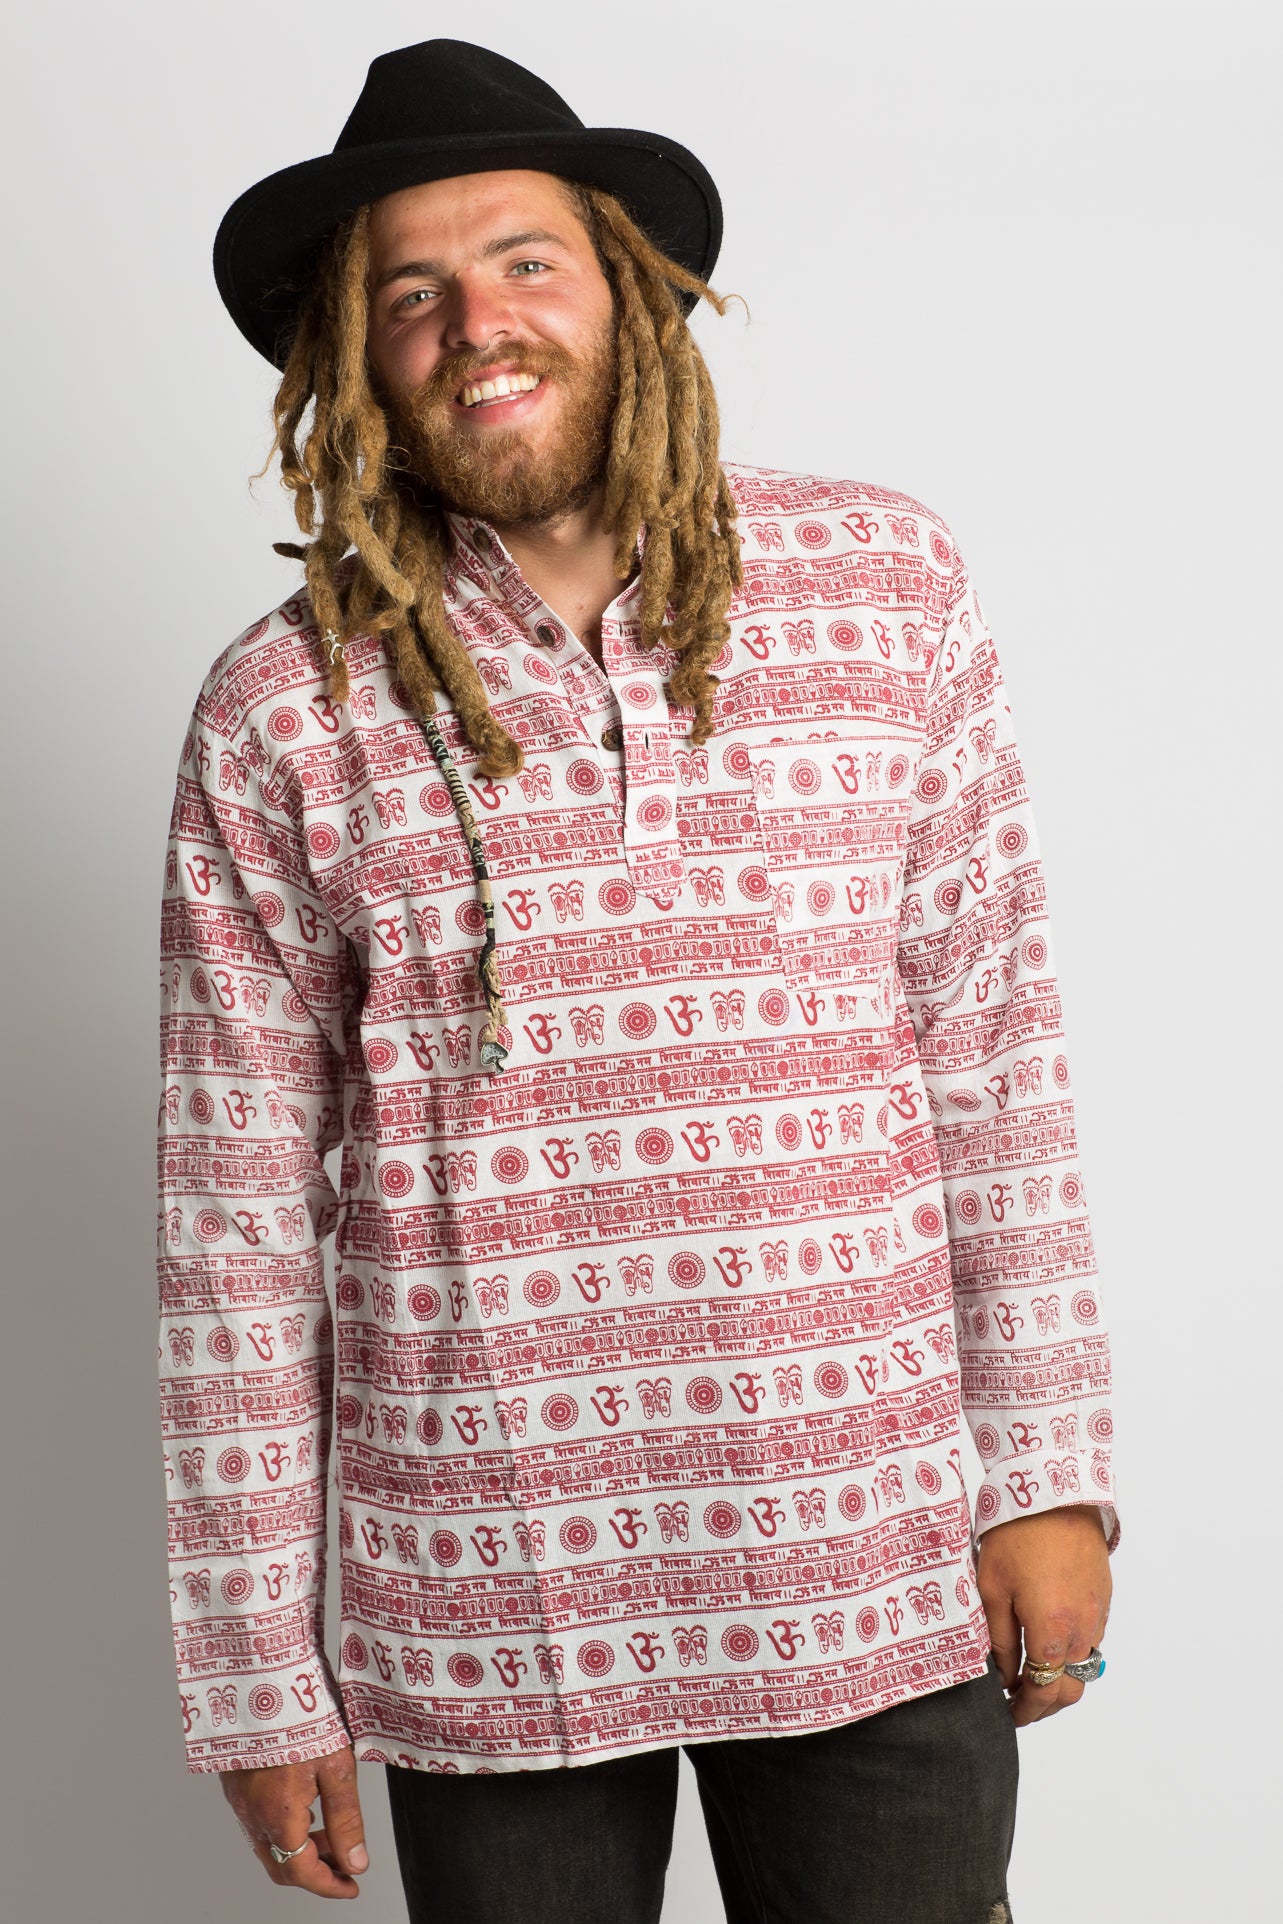 OM Symbol Handmade Nepalese Shirt - Hippie Hut Australia 